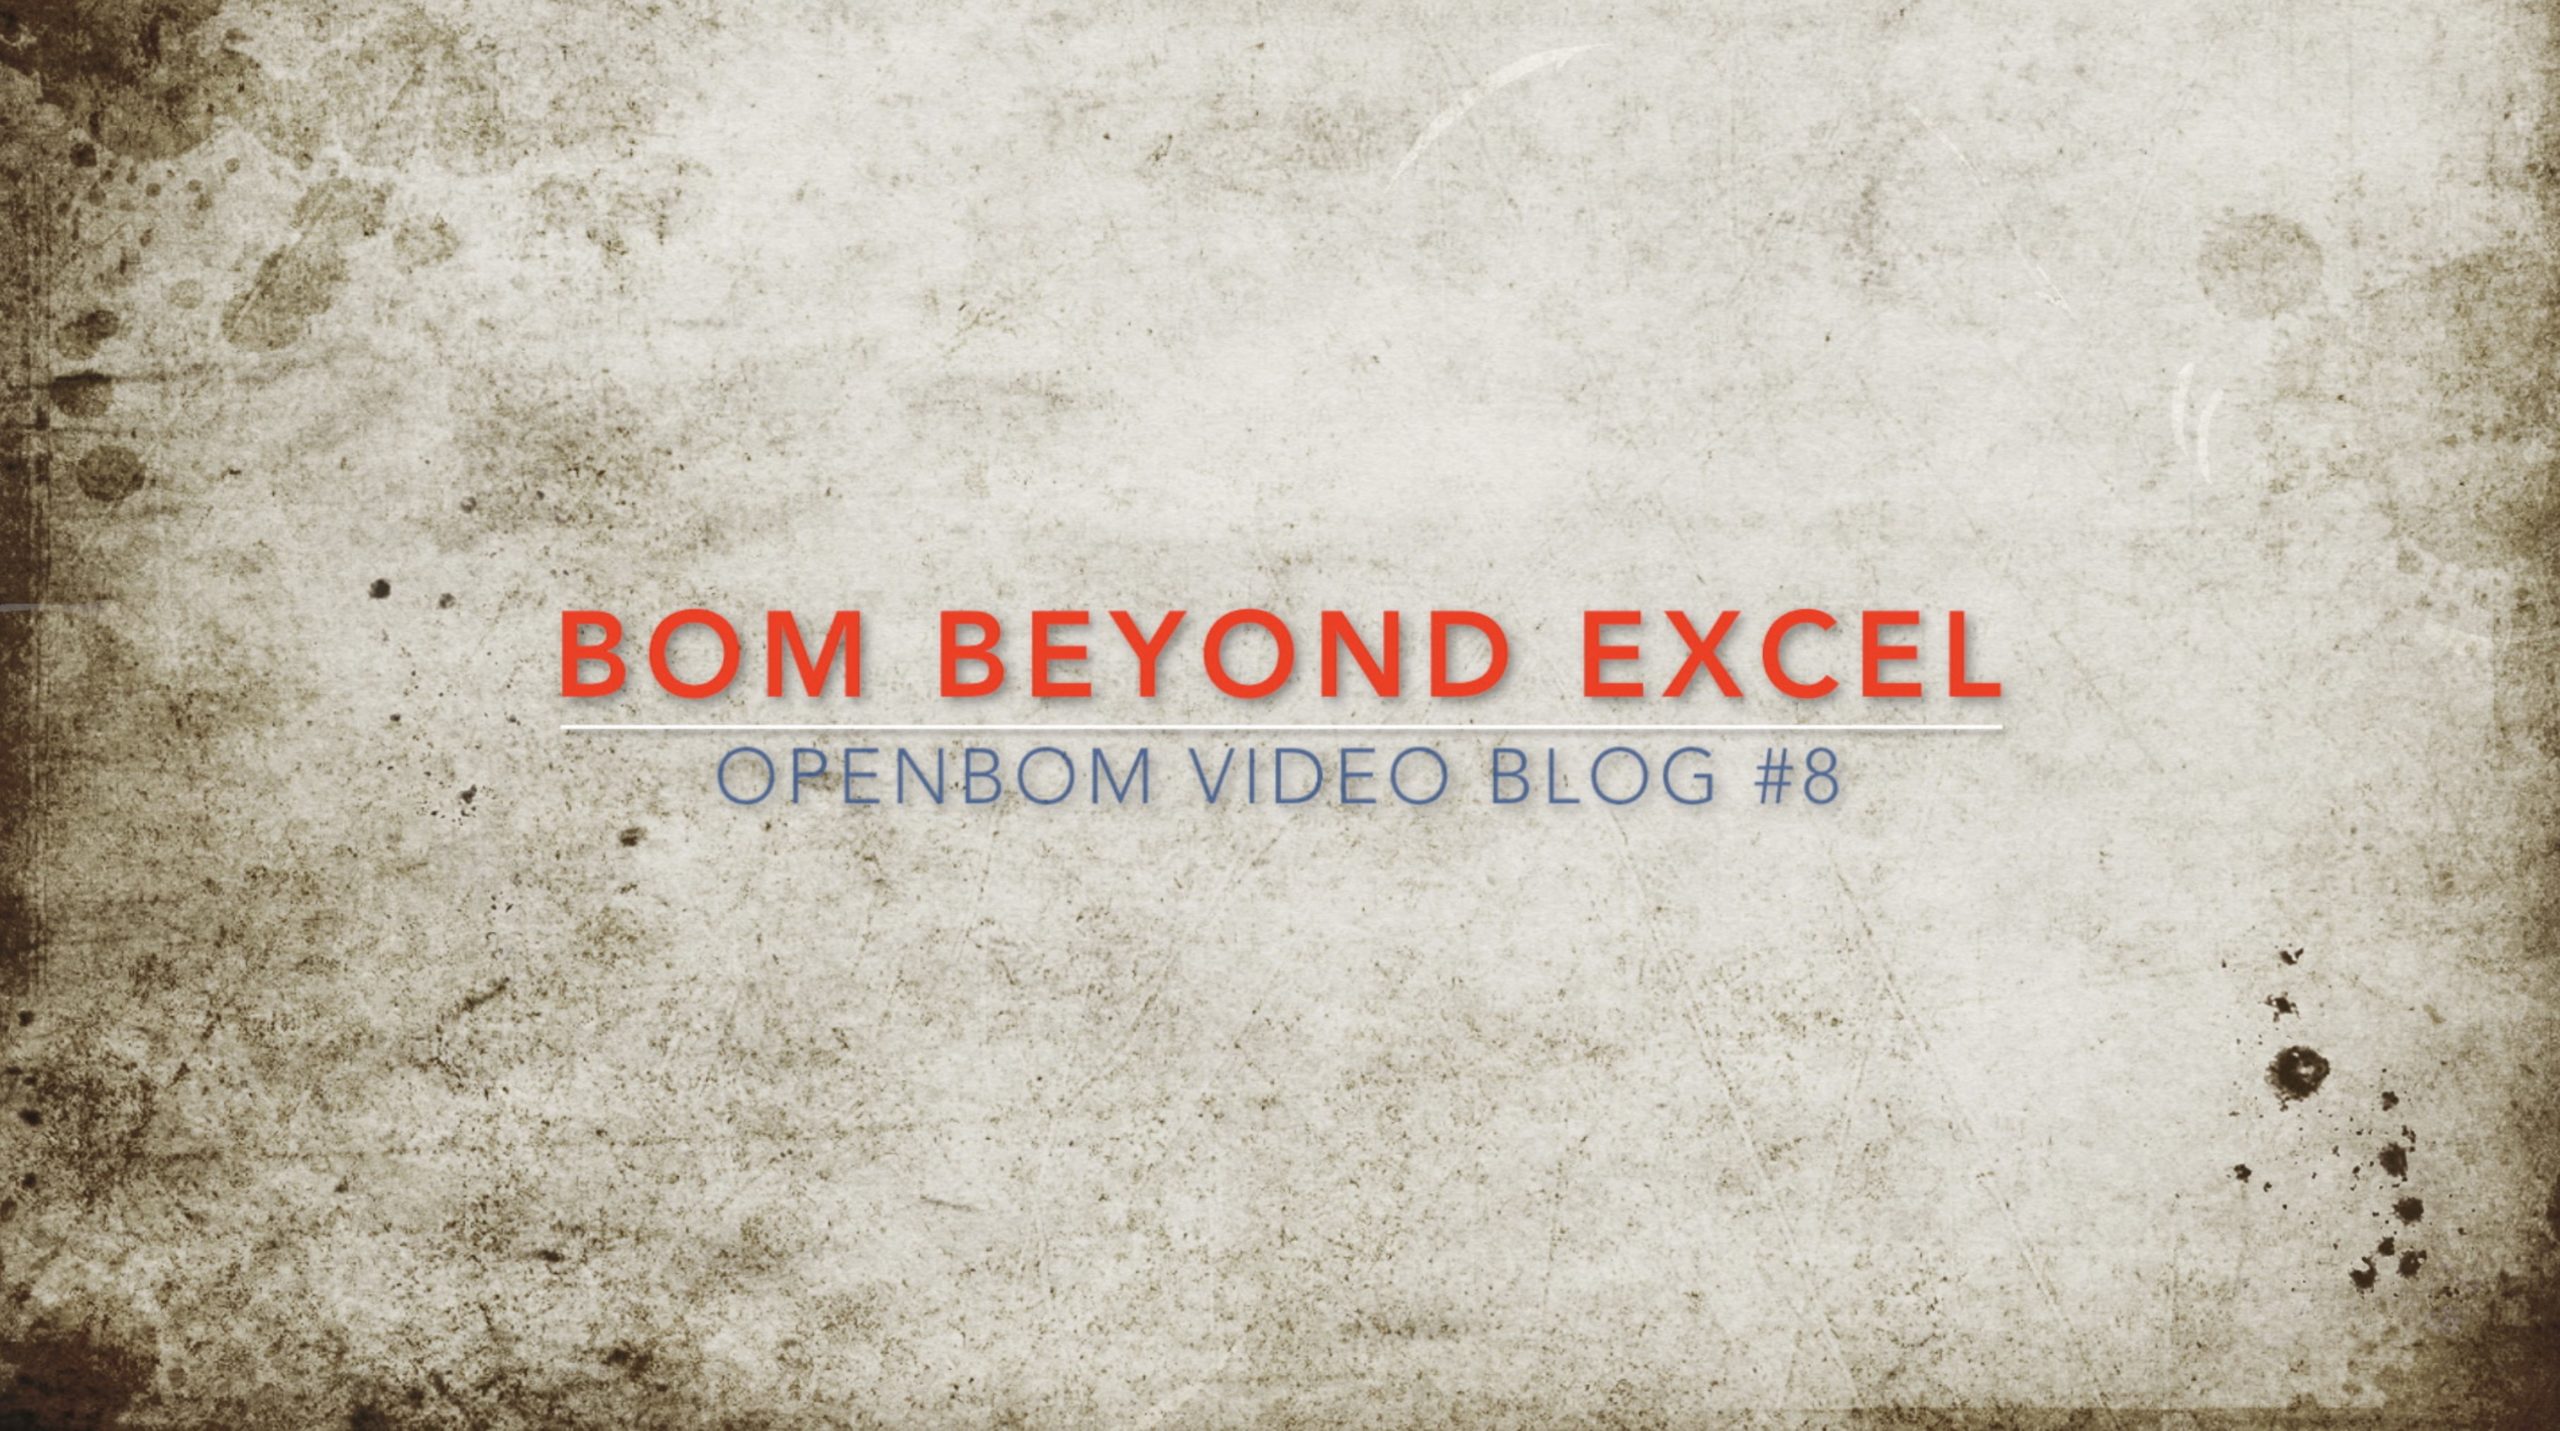 Video blog #8: BOM Beyond Excel